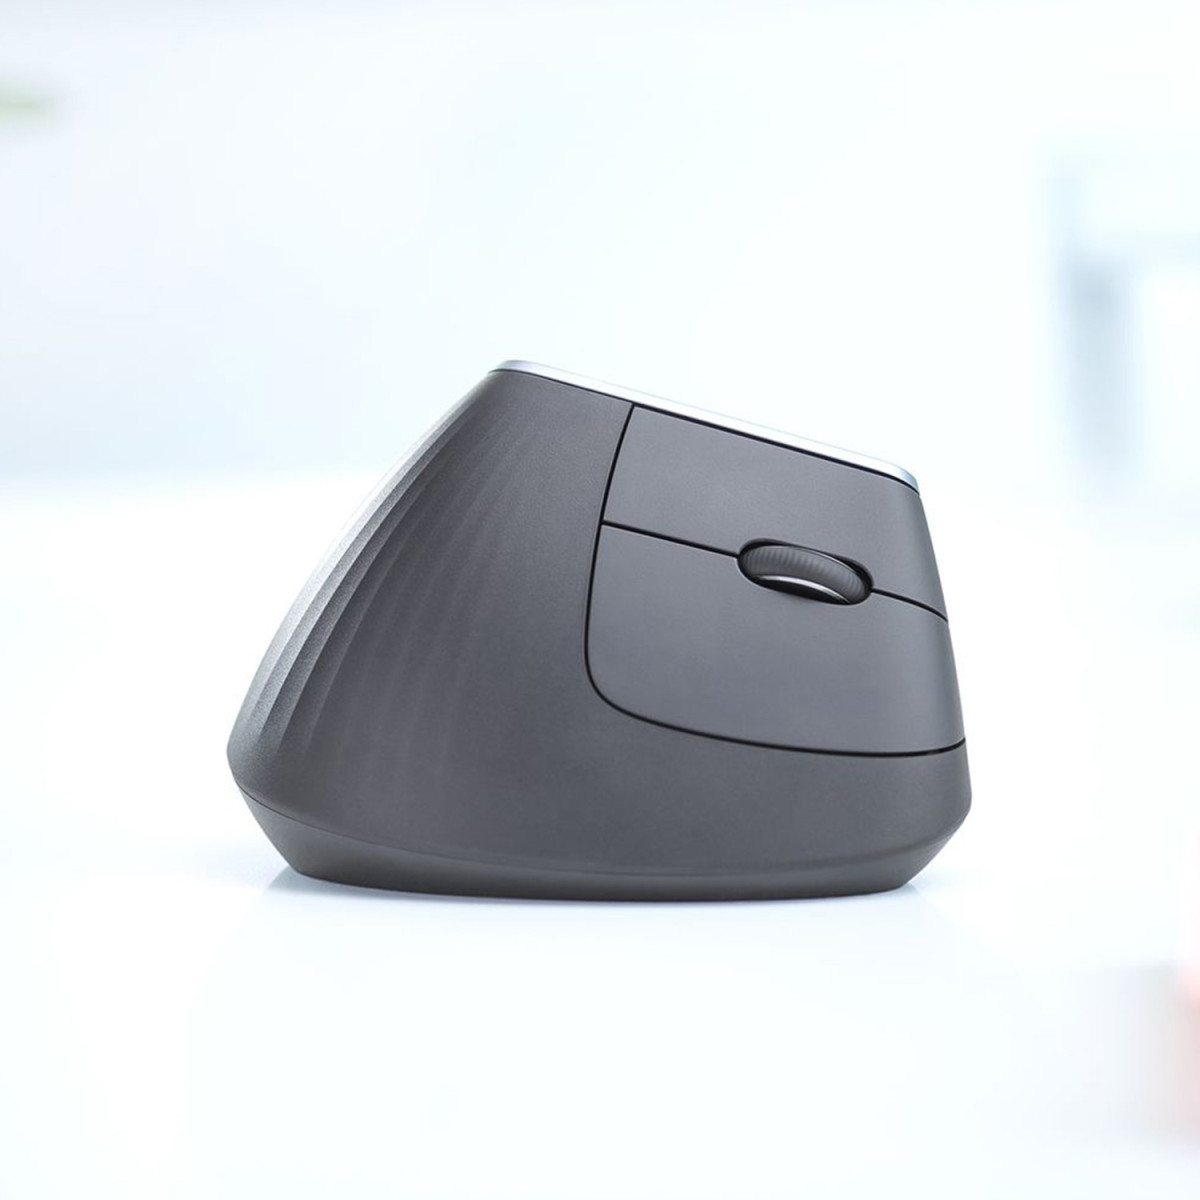 MX Vertical Advanced Ergo Mouse-GRAPHITE